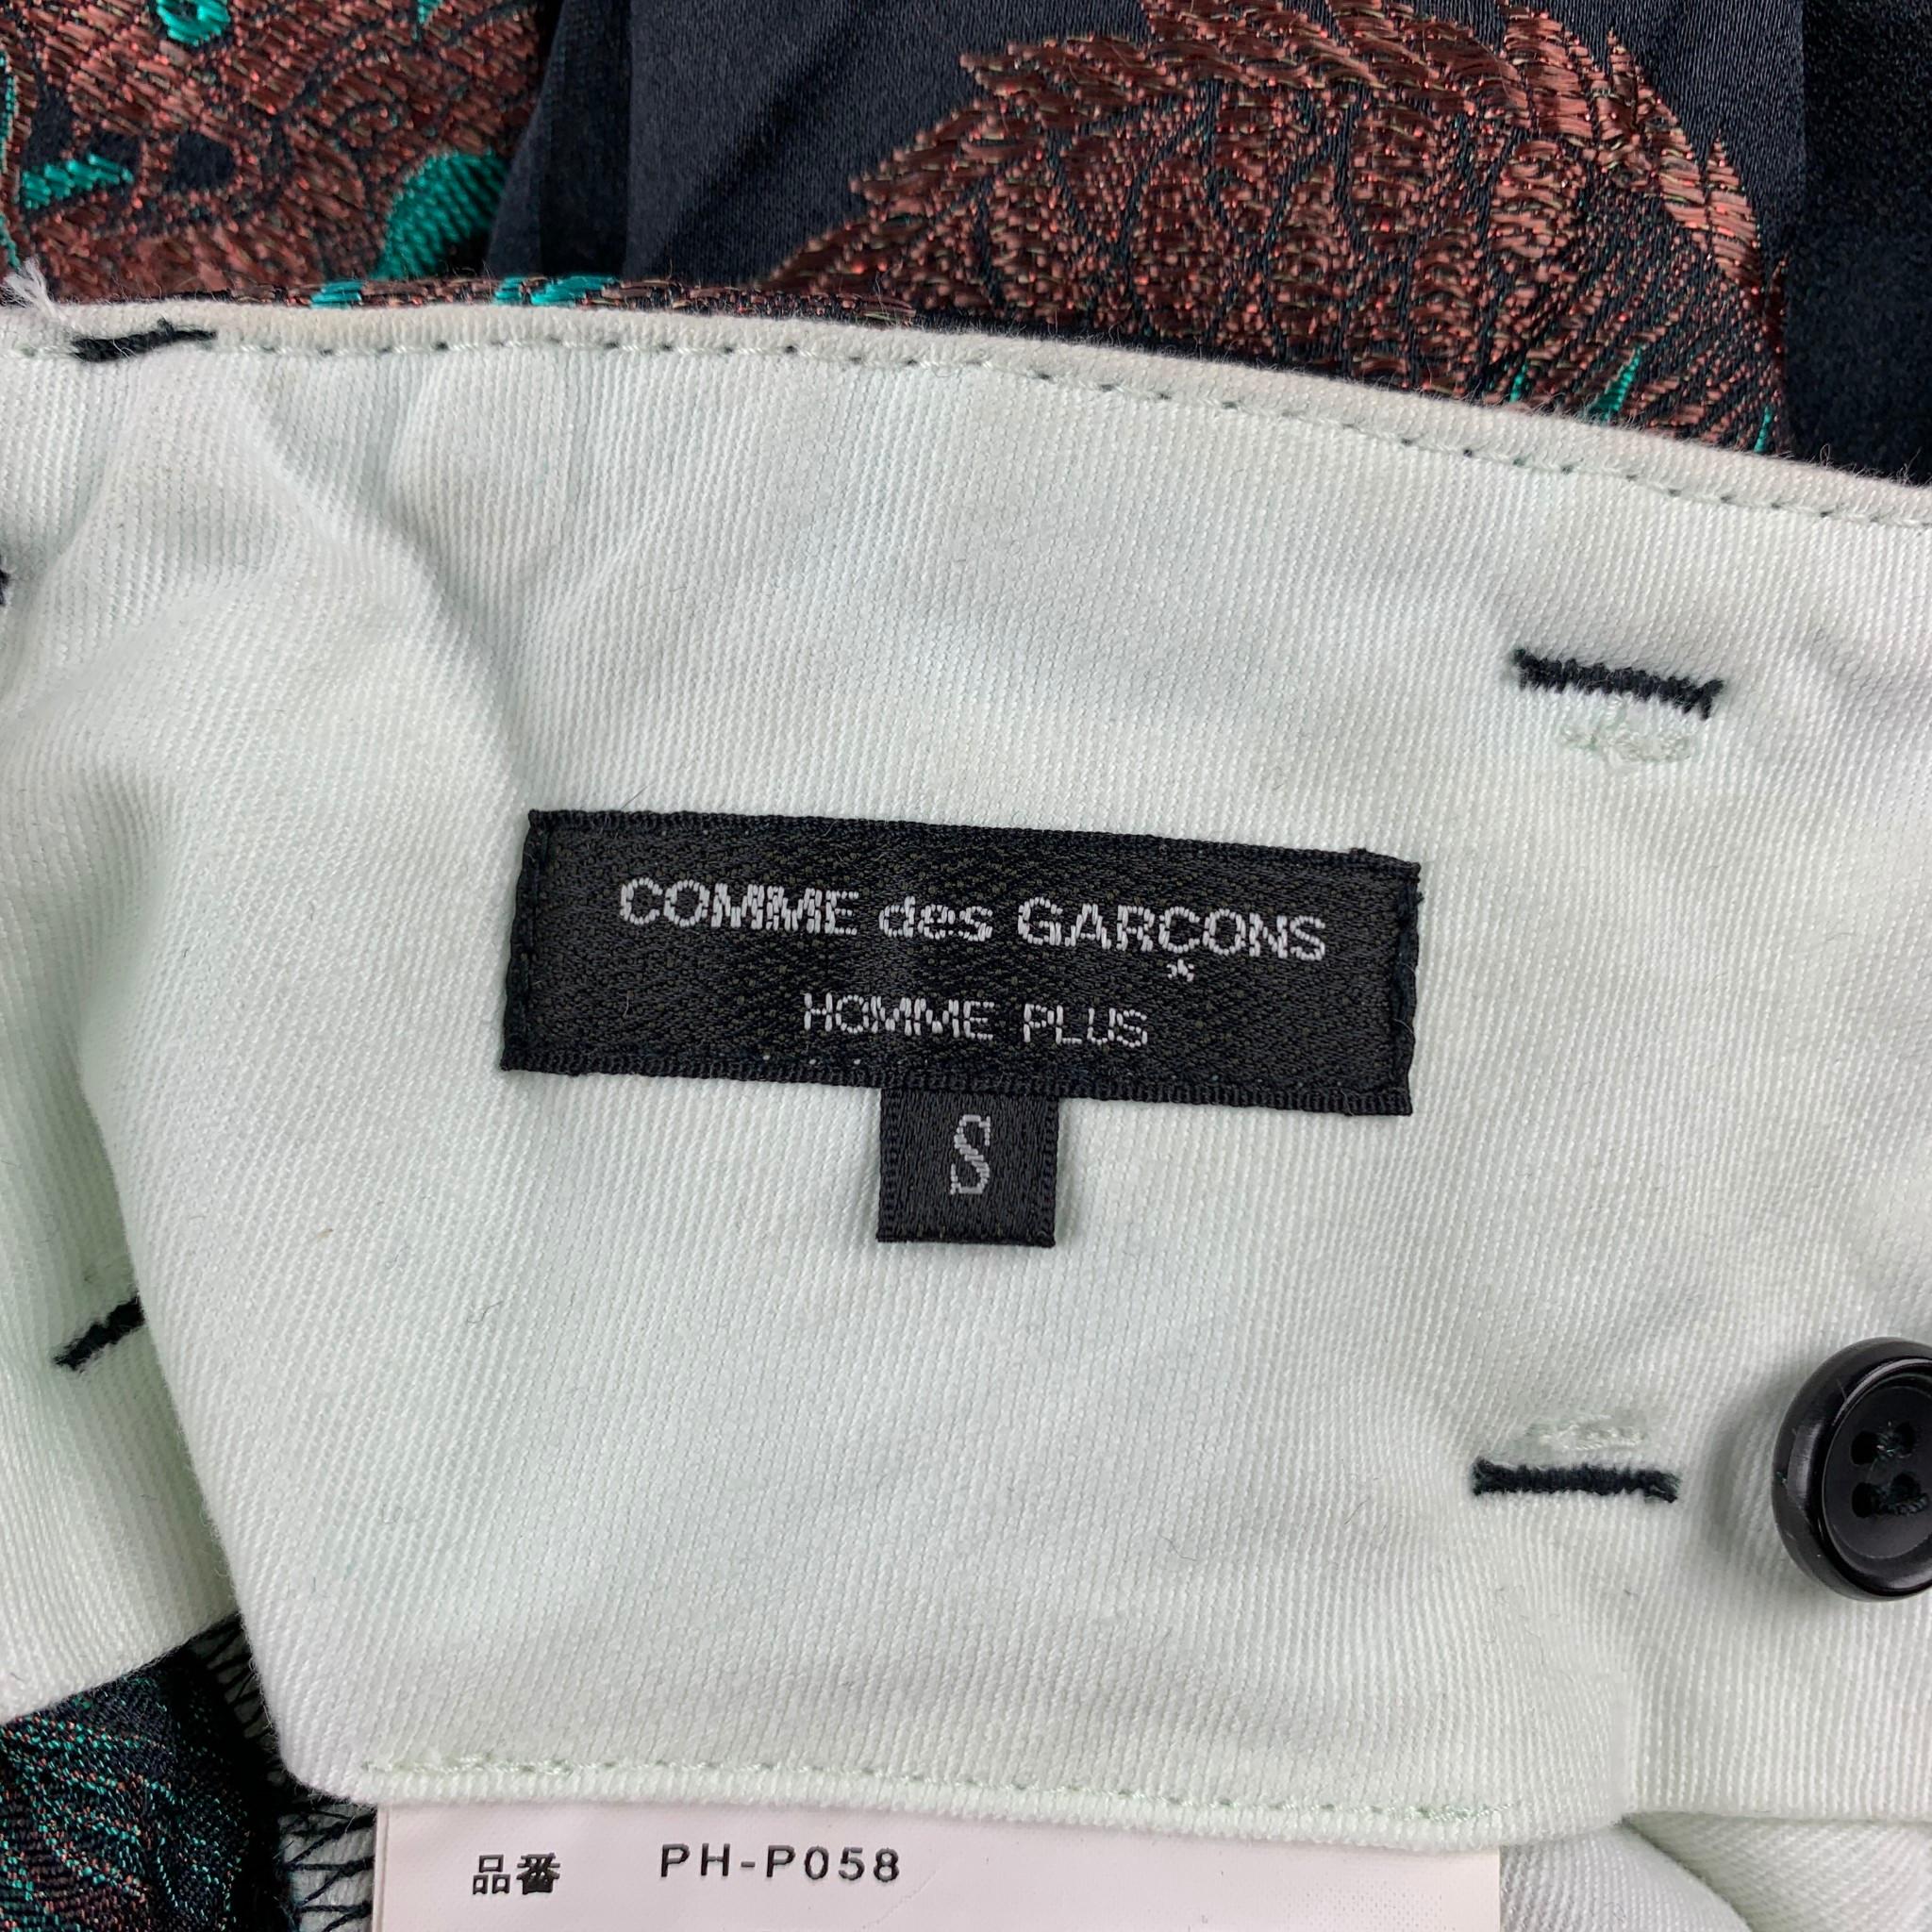 COMME des GARCONS HOMME PLUS Size S Black & Gold Rayon / Polyester Pants 1